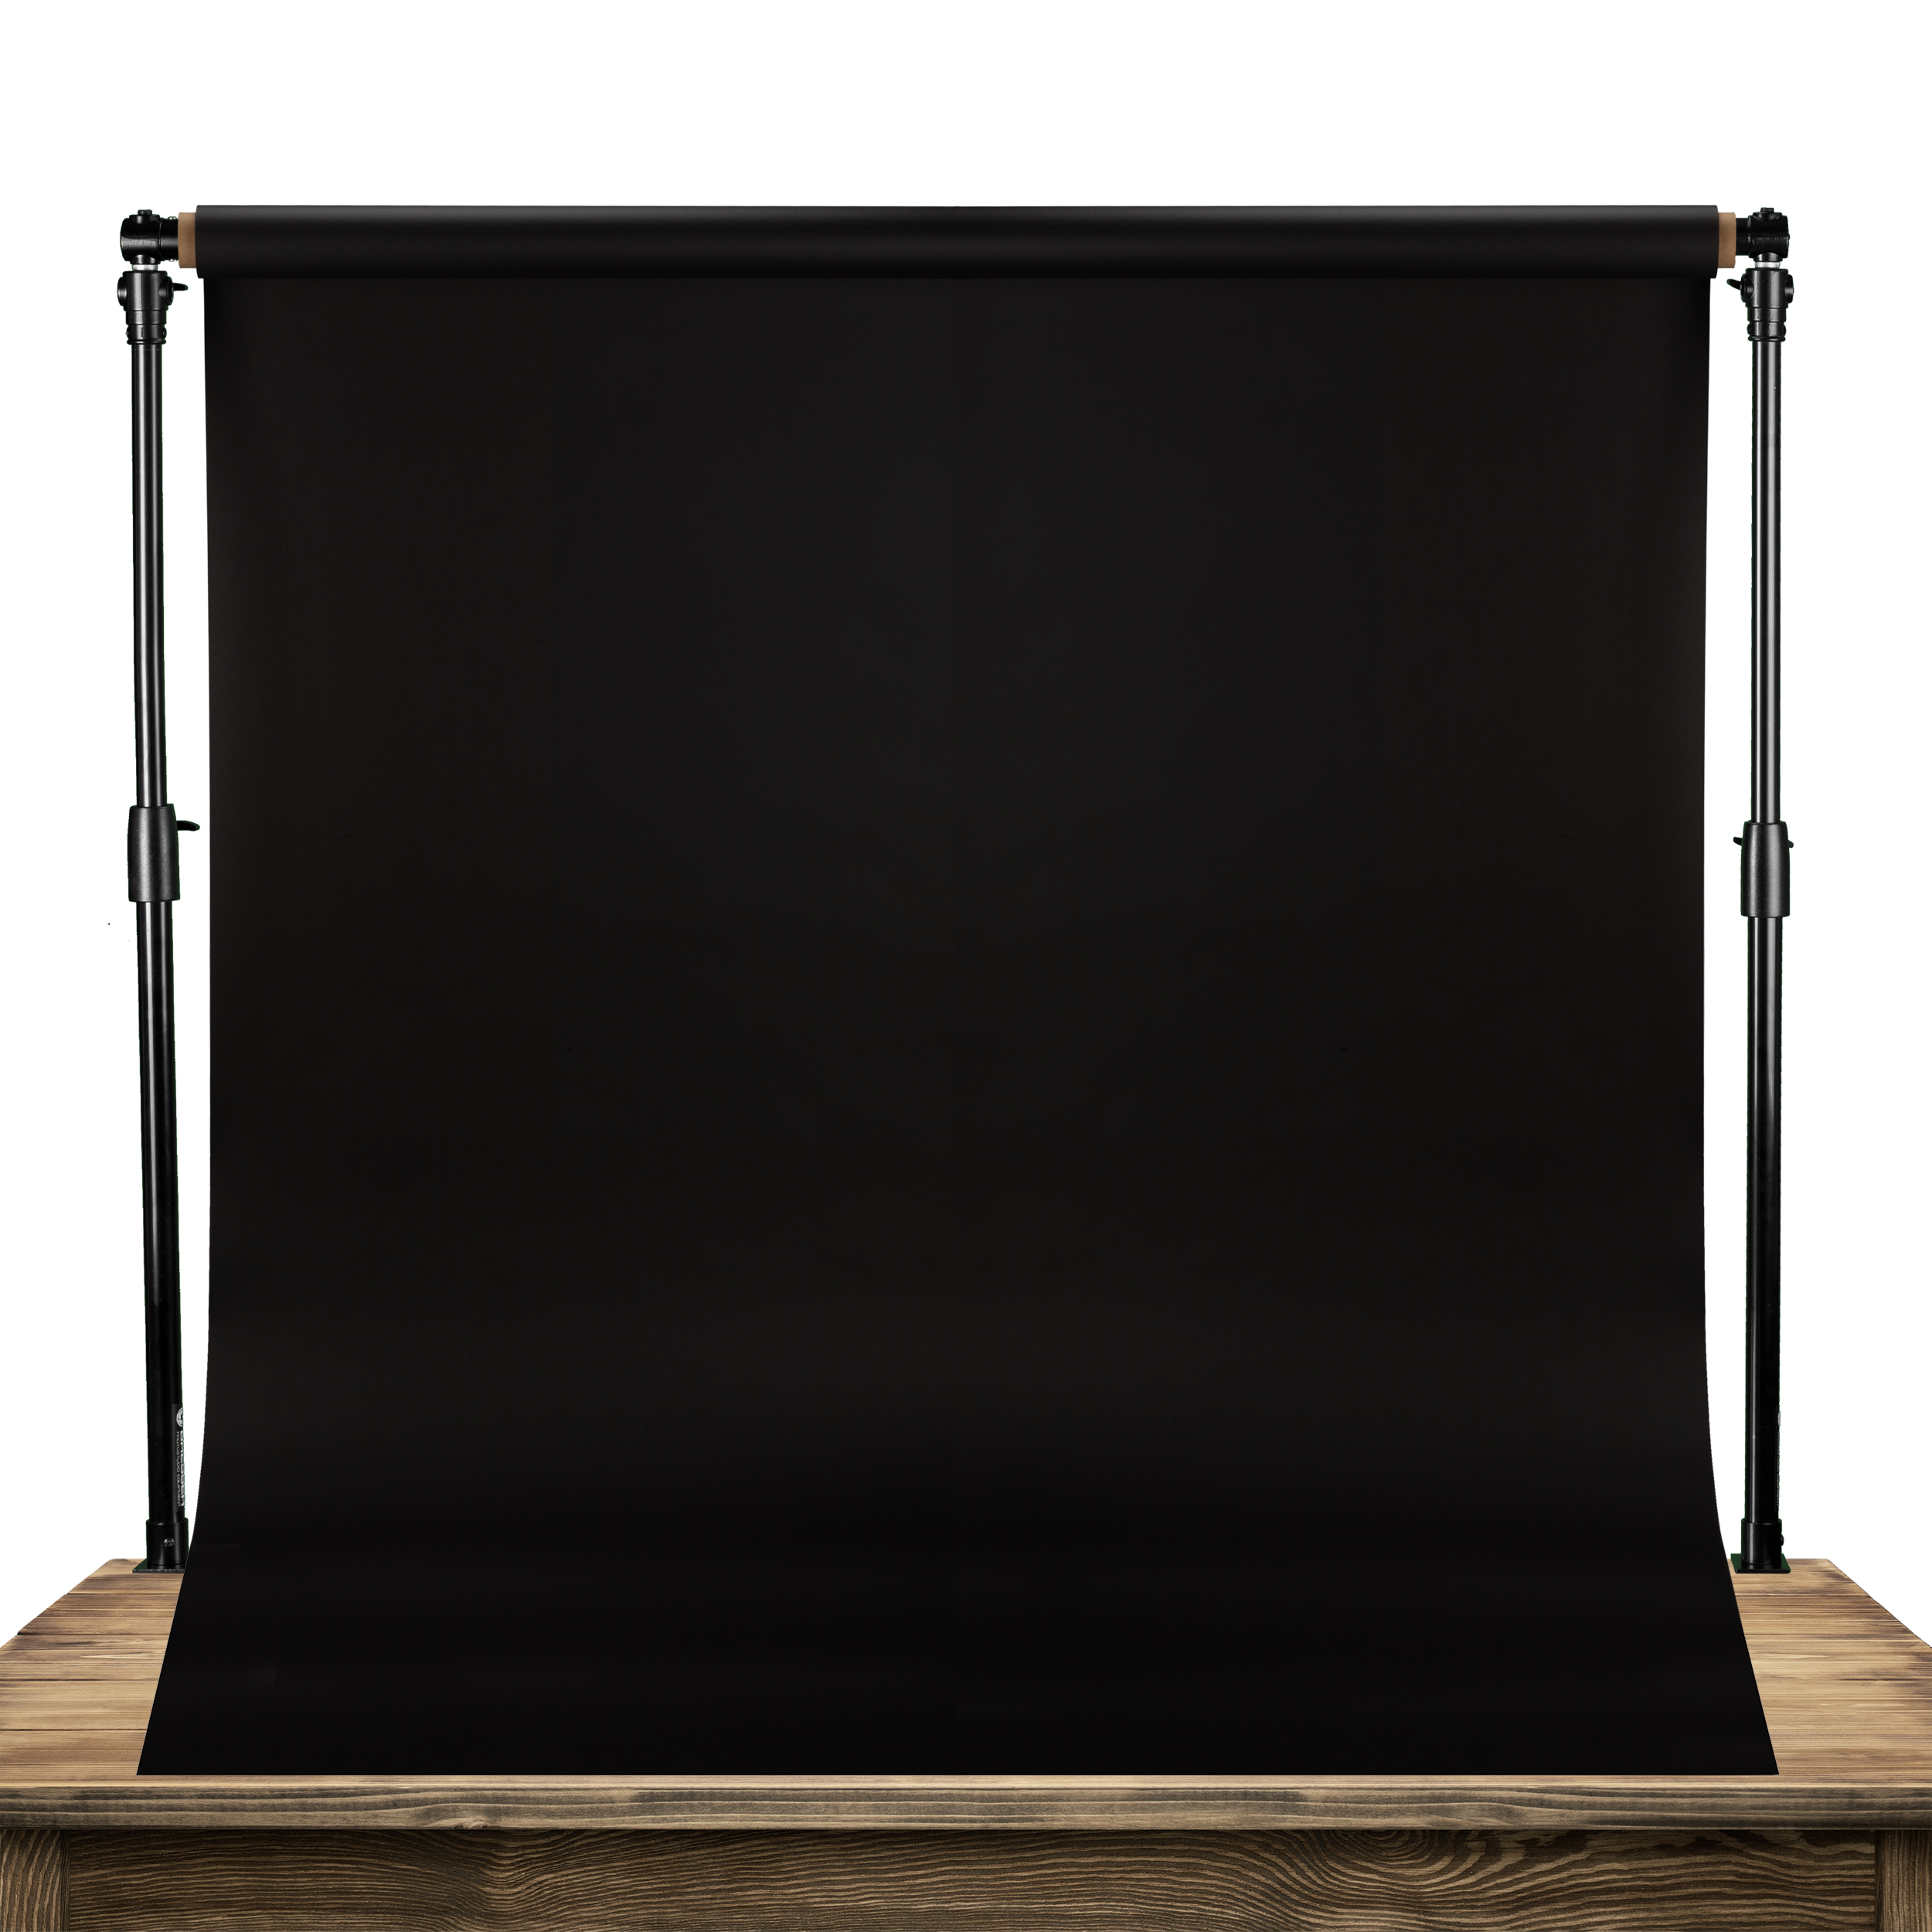 BRESSER Tabletop Hintergrundsystem 60 x 300 cm